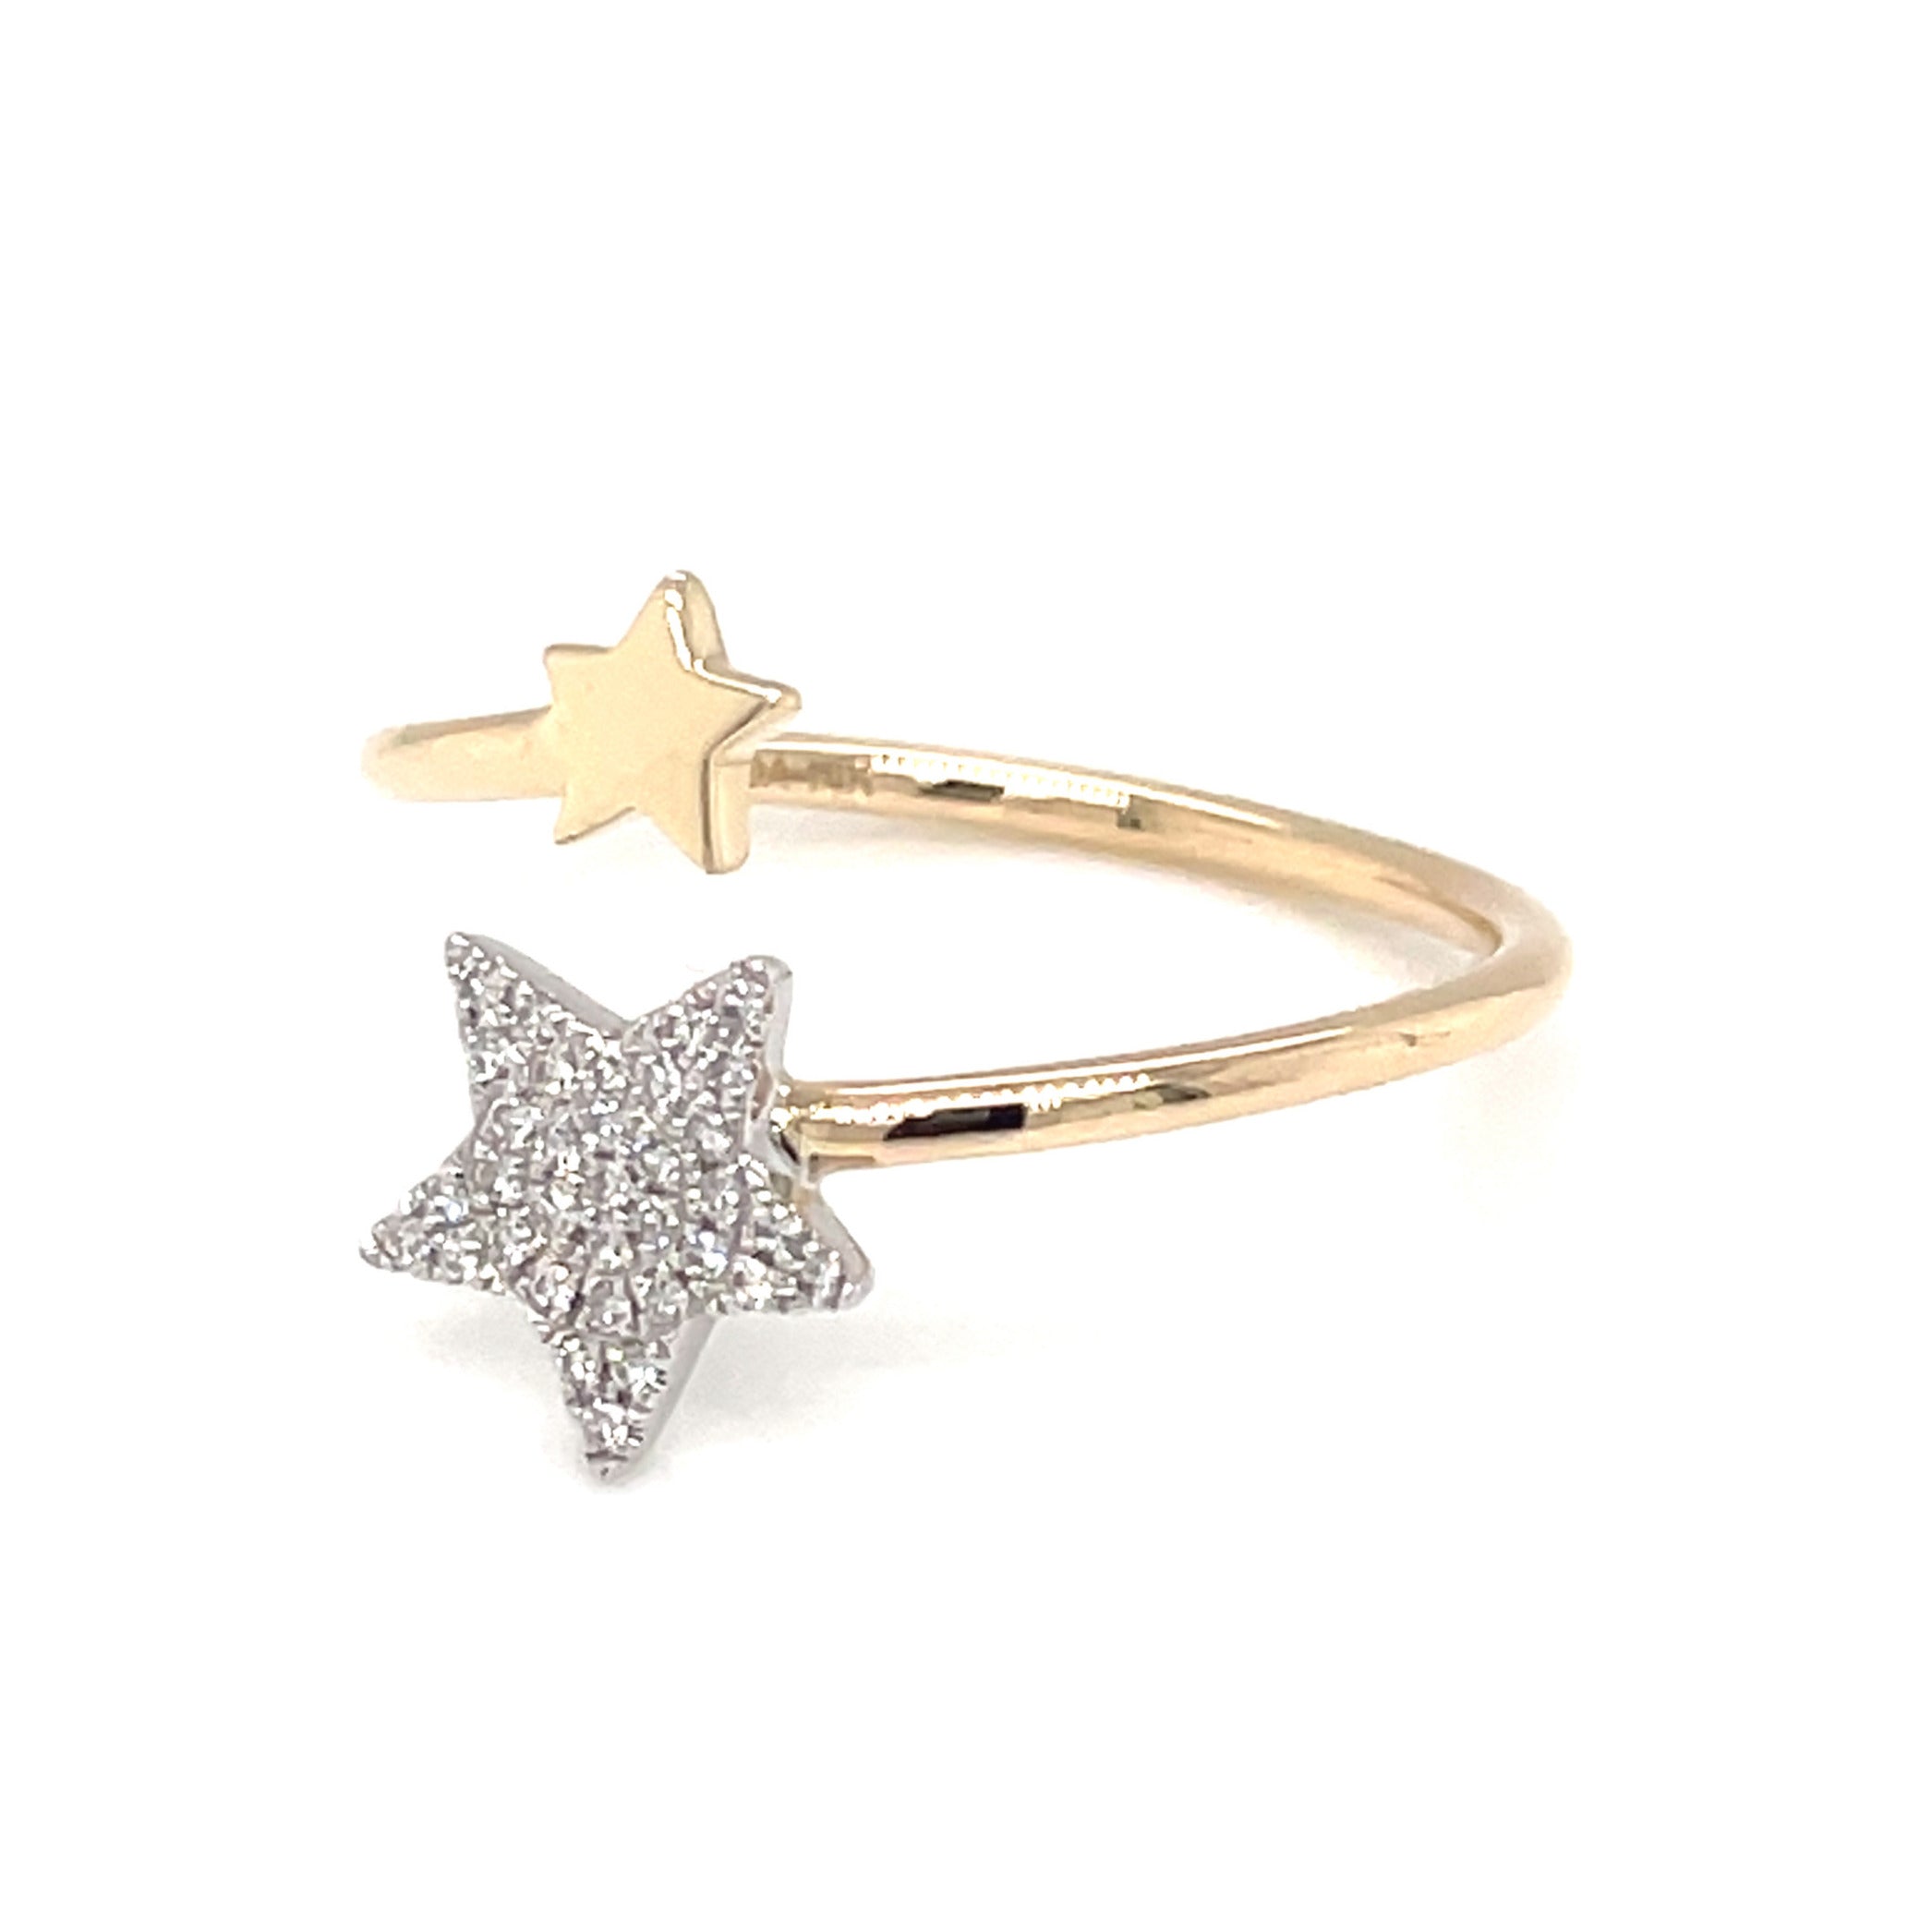 Diamond Star Ring